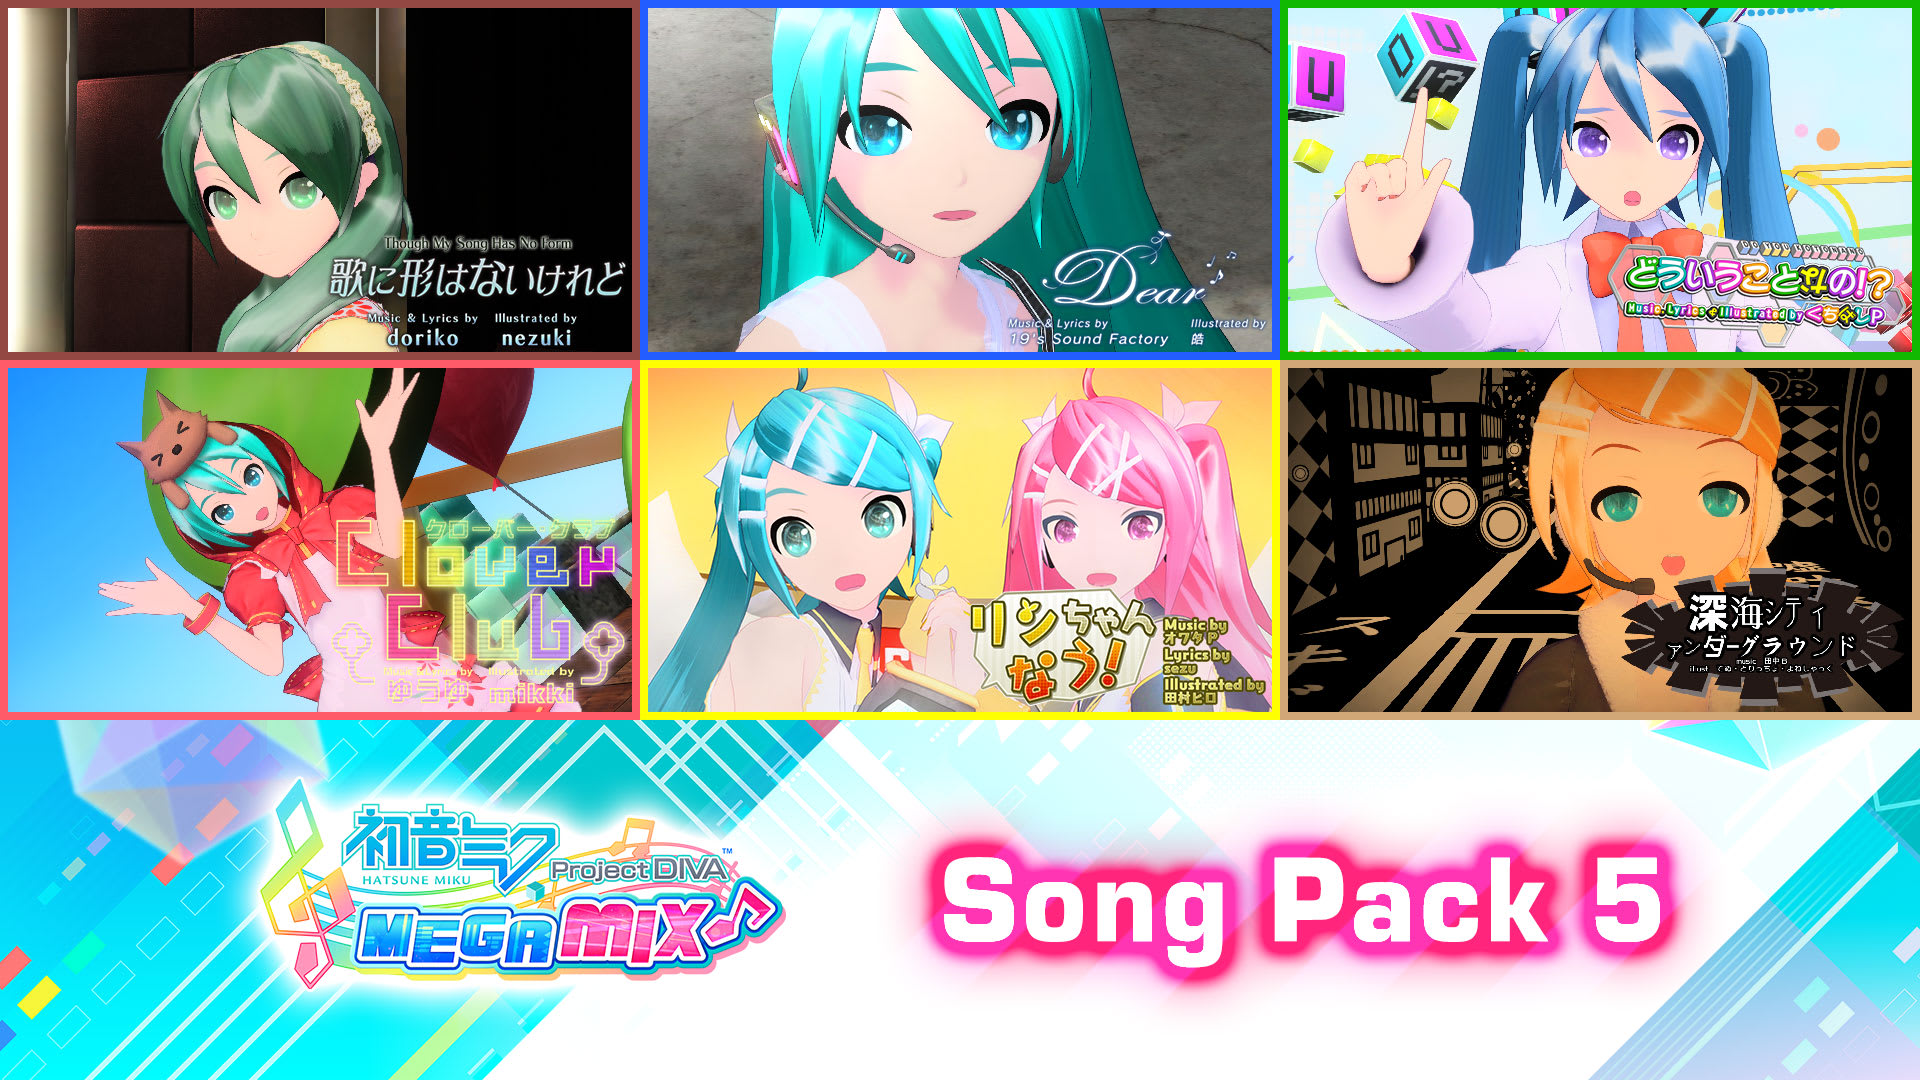 Hatsune Miku: Project DIVA Mega Mix Song Pack 5